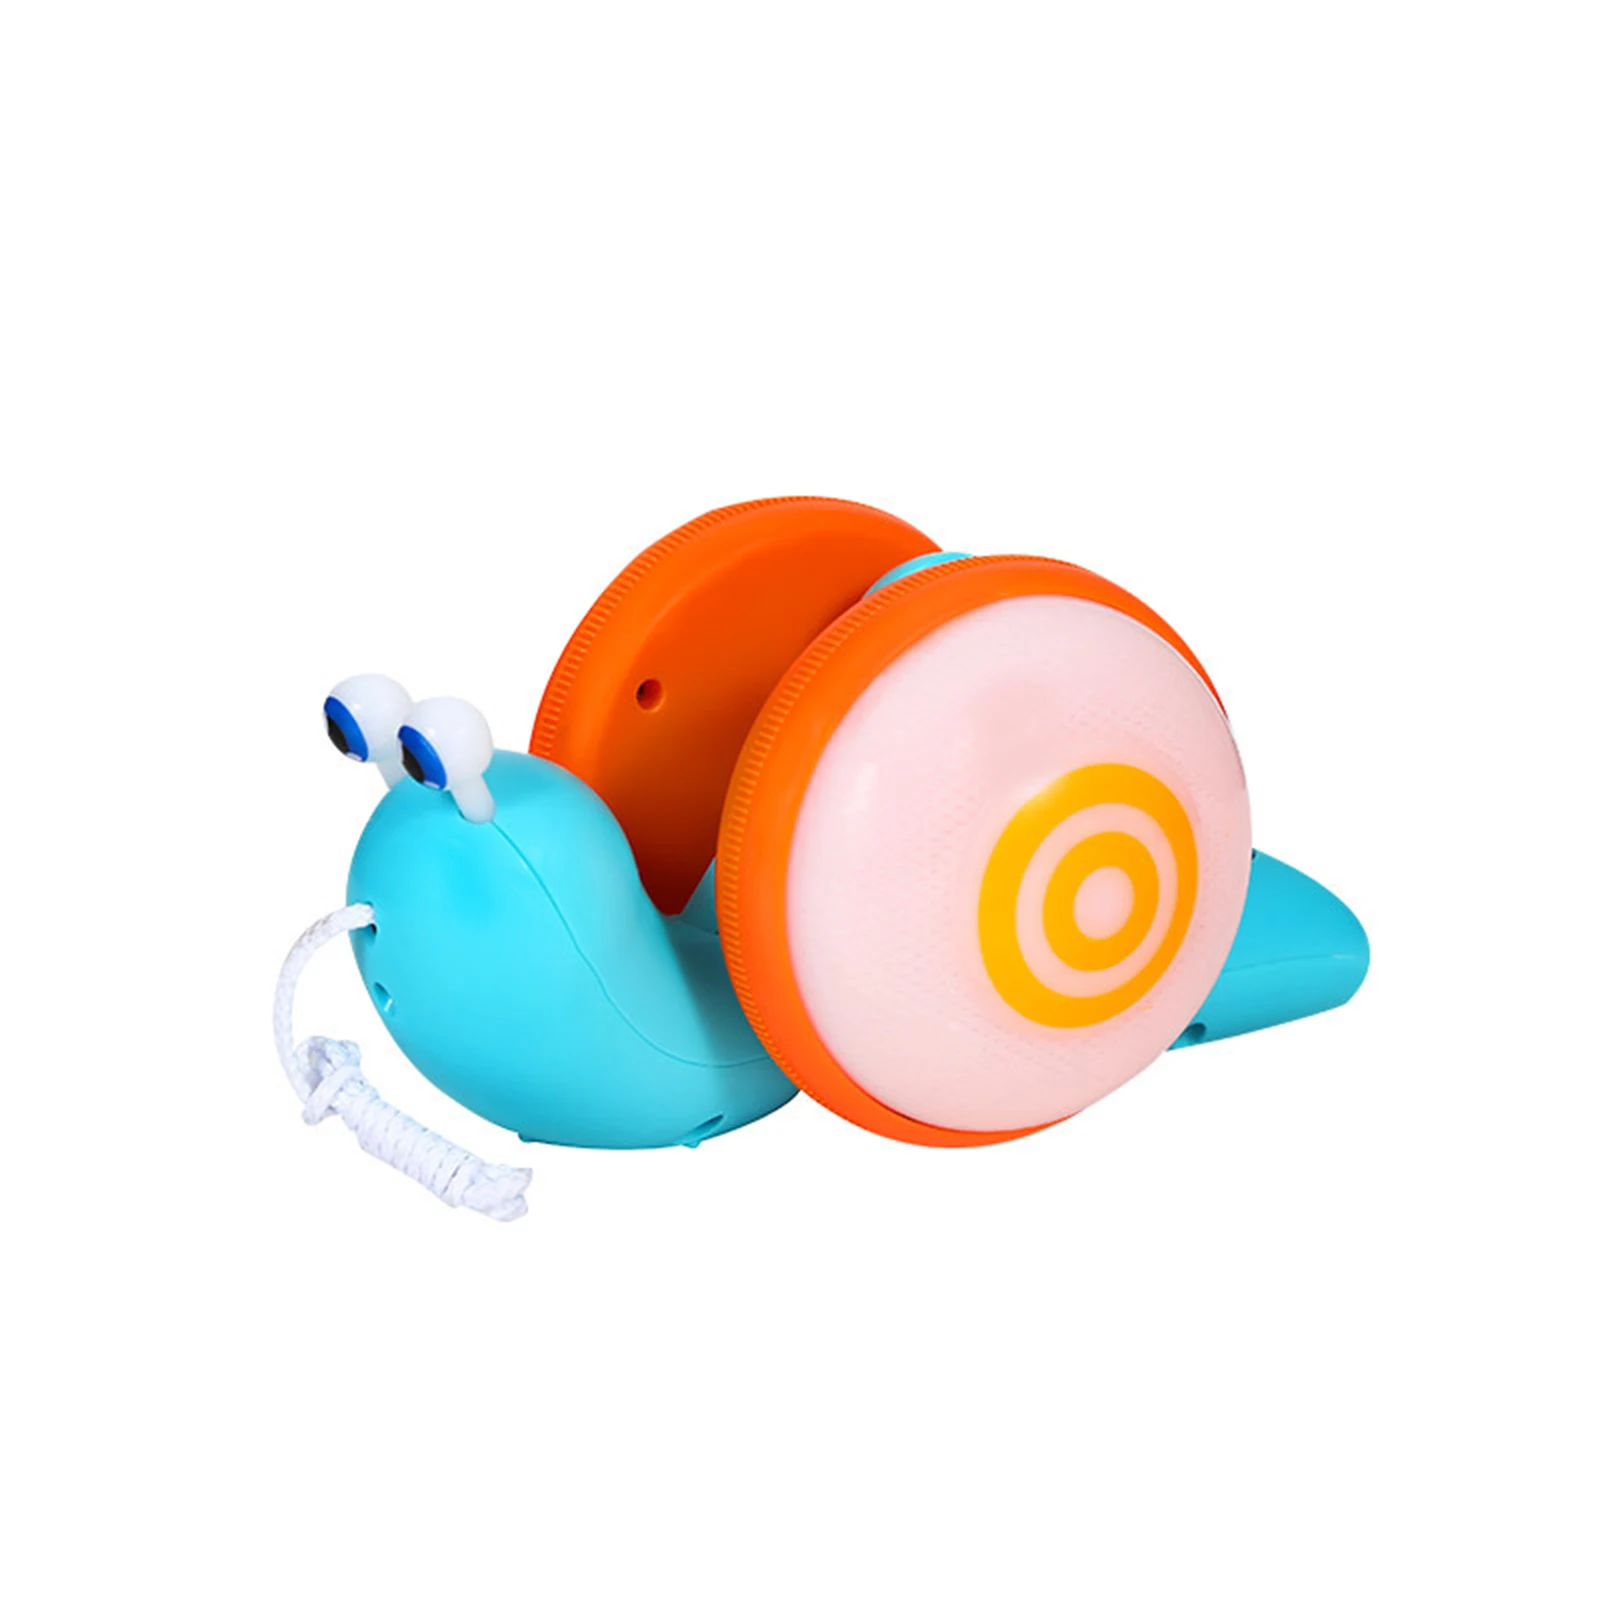 Baby Snail-shaped Pull-Along Toys Learn Walk Tools] Lighting Music Push Pull Toys Walker Motor Skills Toy